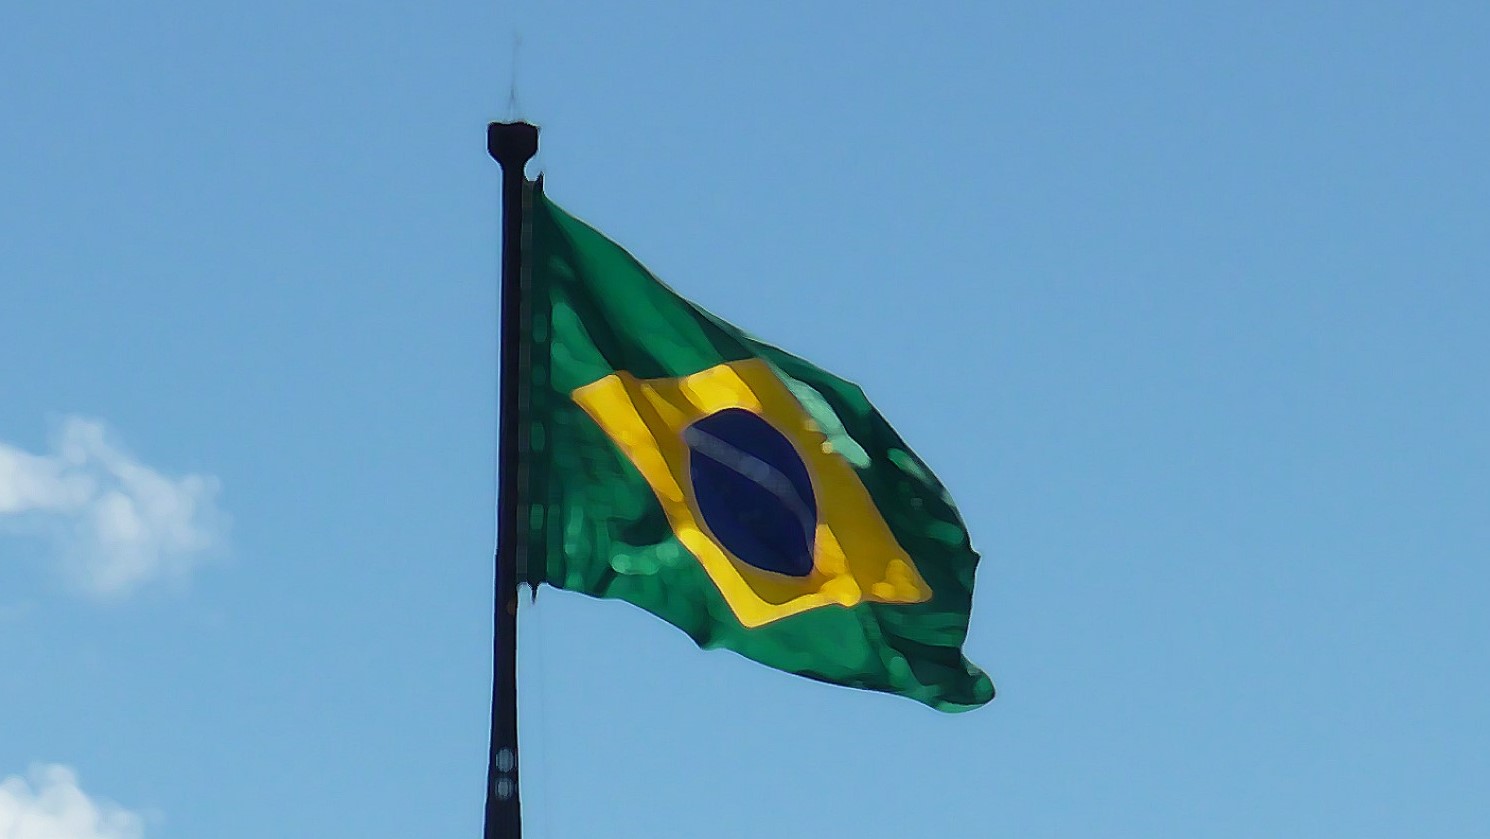 Hino à Bandeira do Brasil